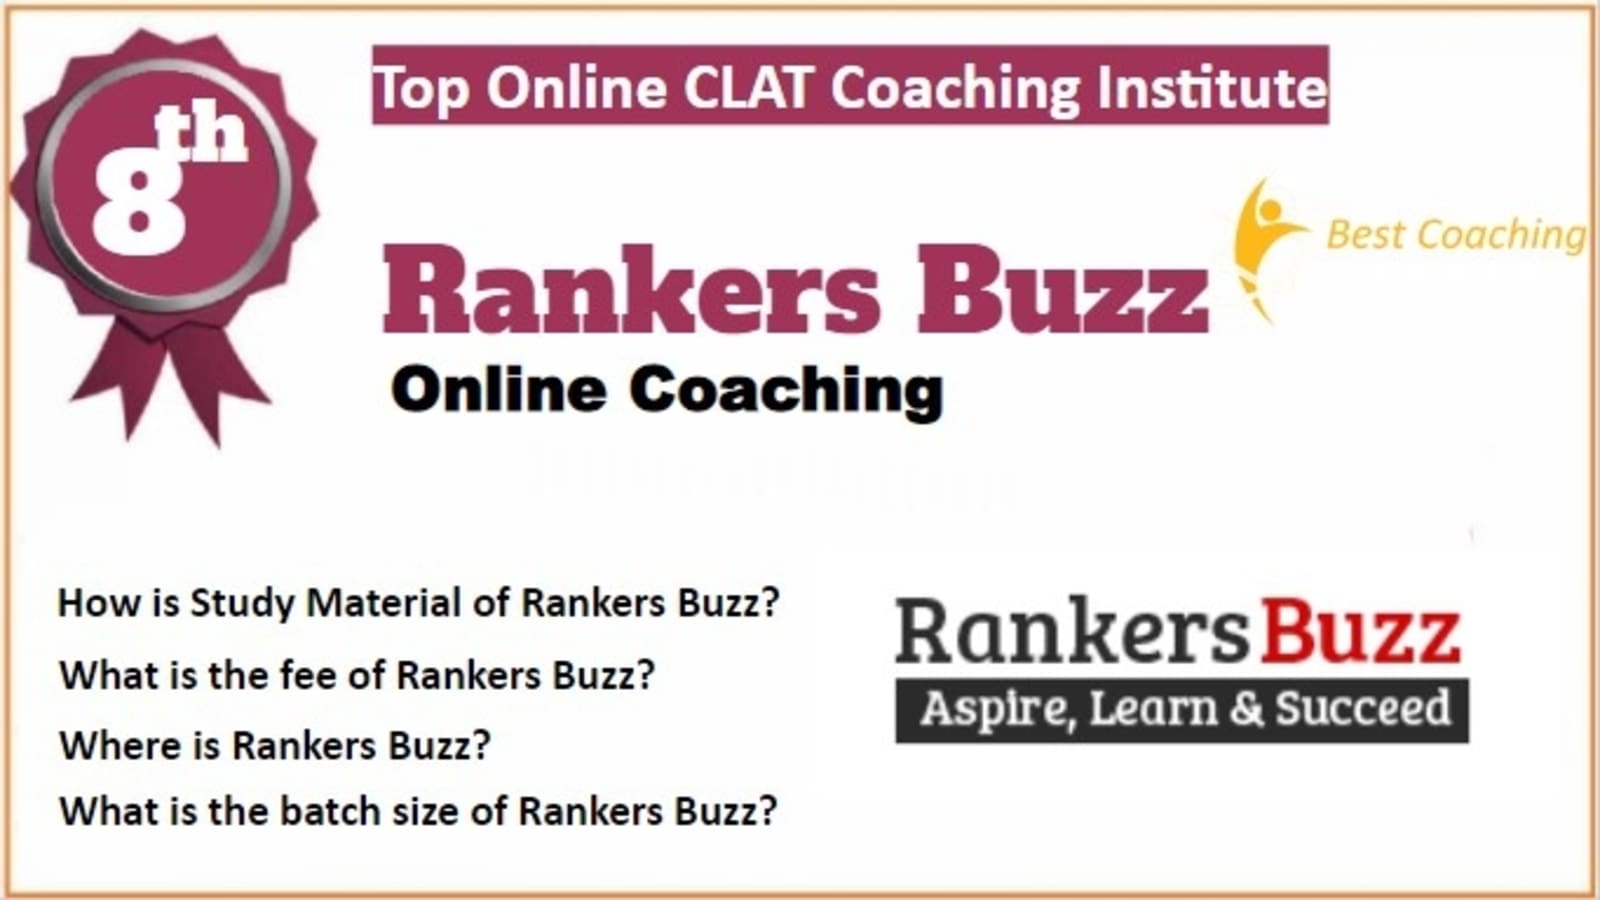 Rank 8 Best Online CLAT Coaching